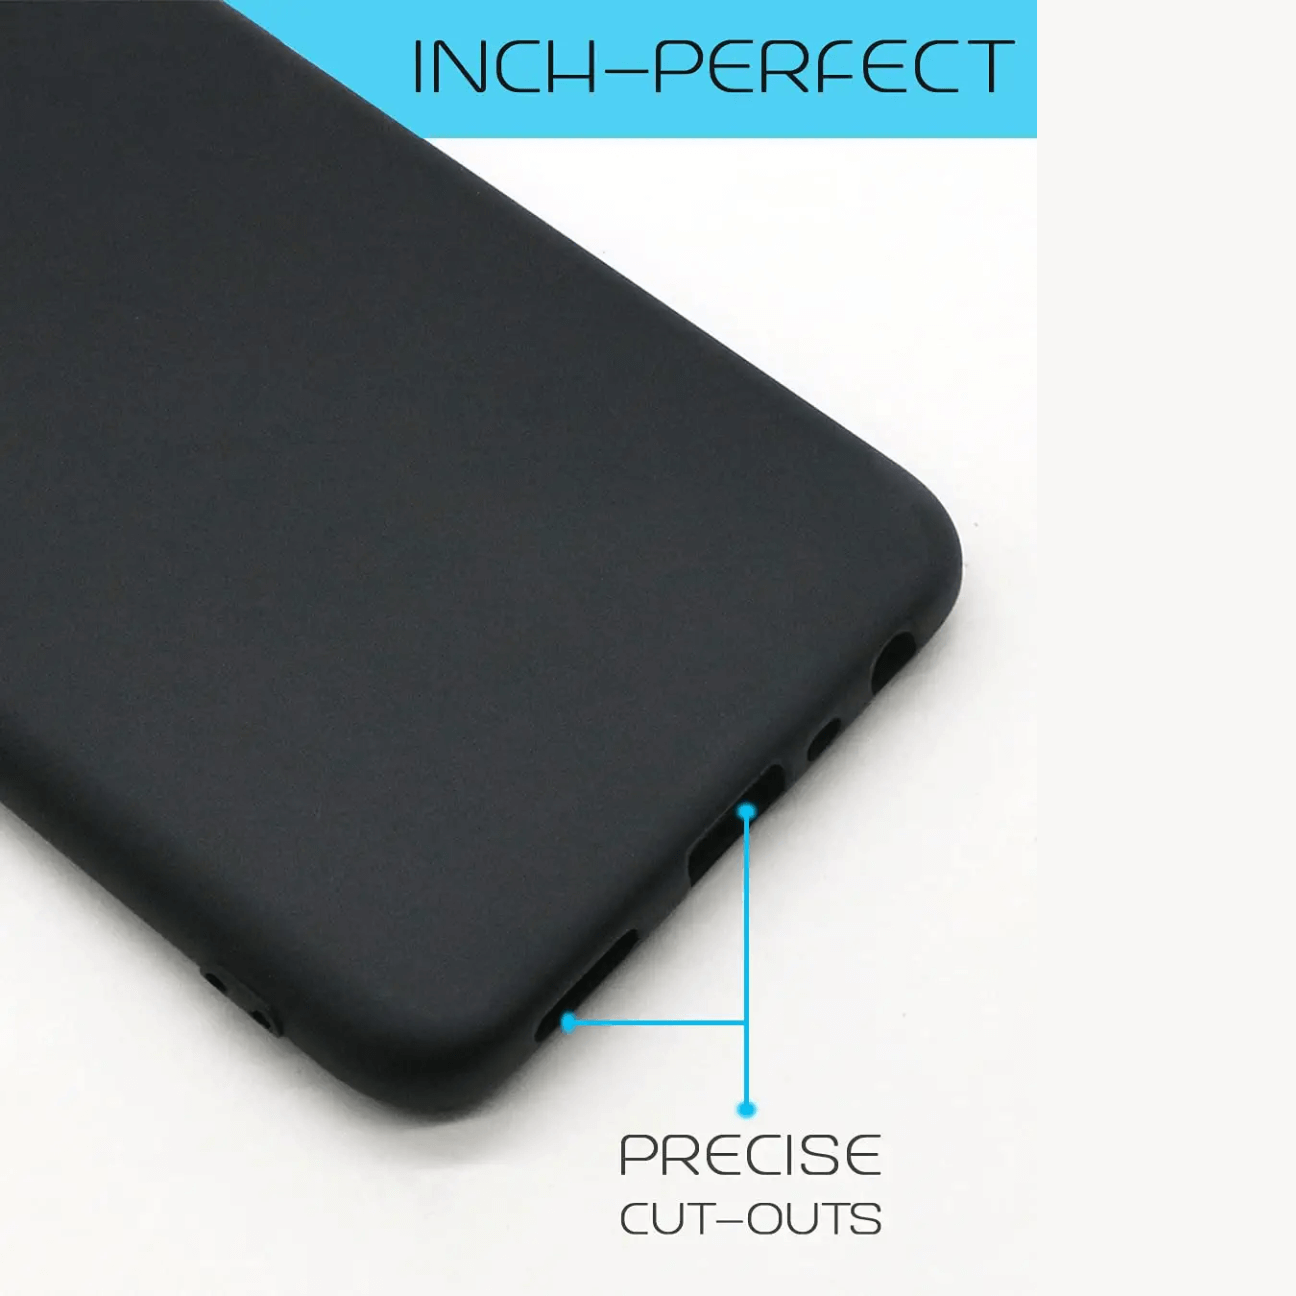 Xiaomi Mi Note 10 (2019) Black Soft Silicone Phone Case